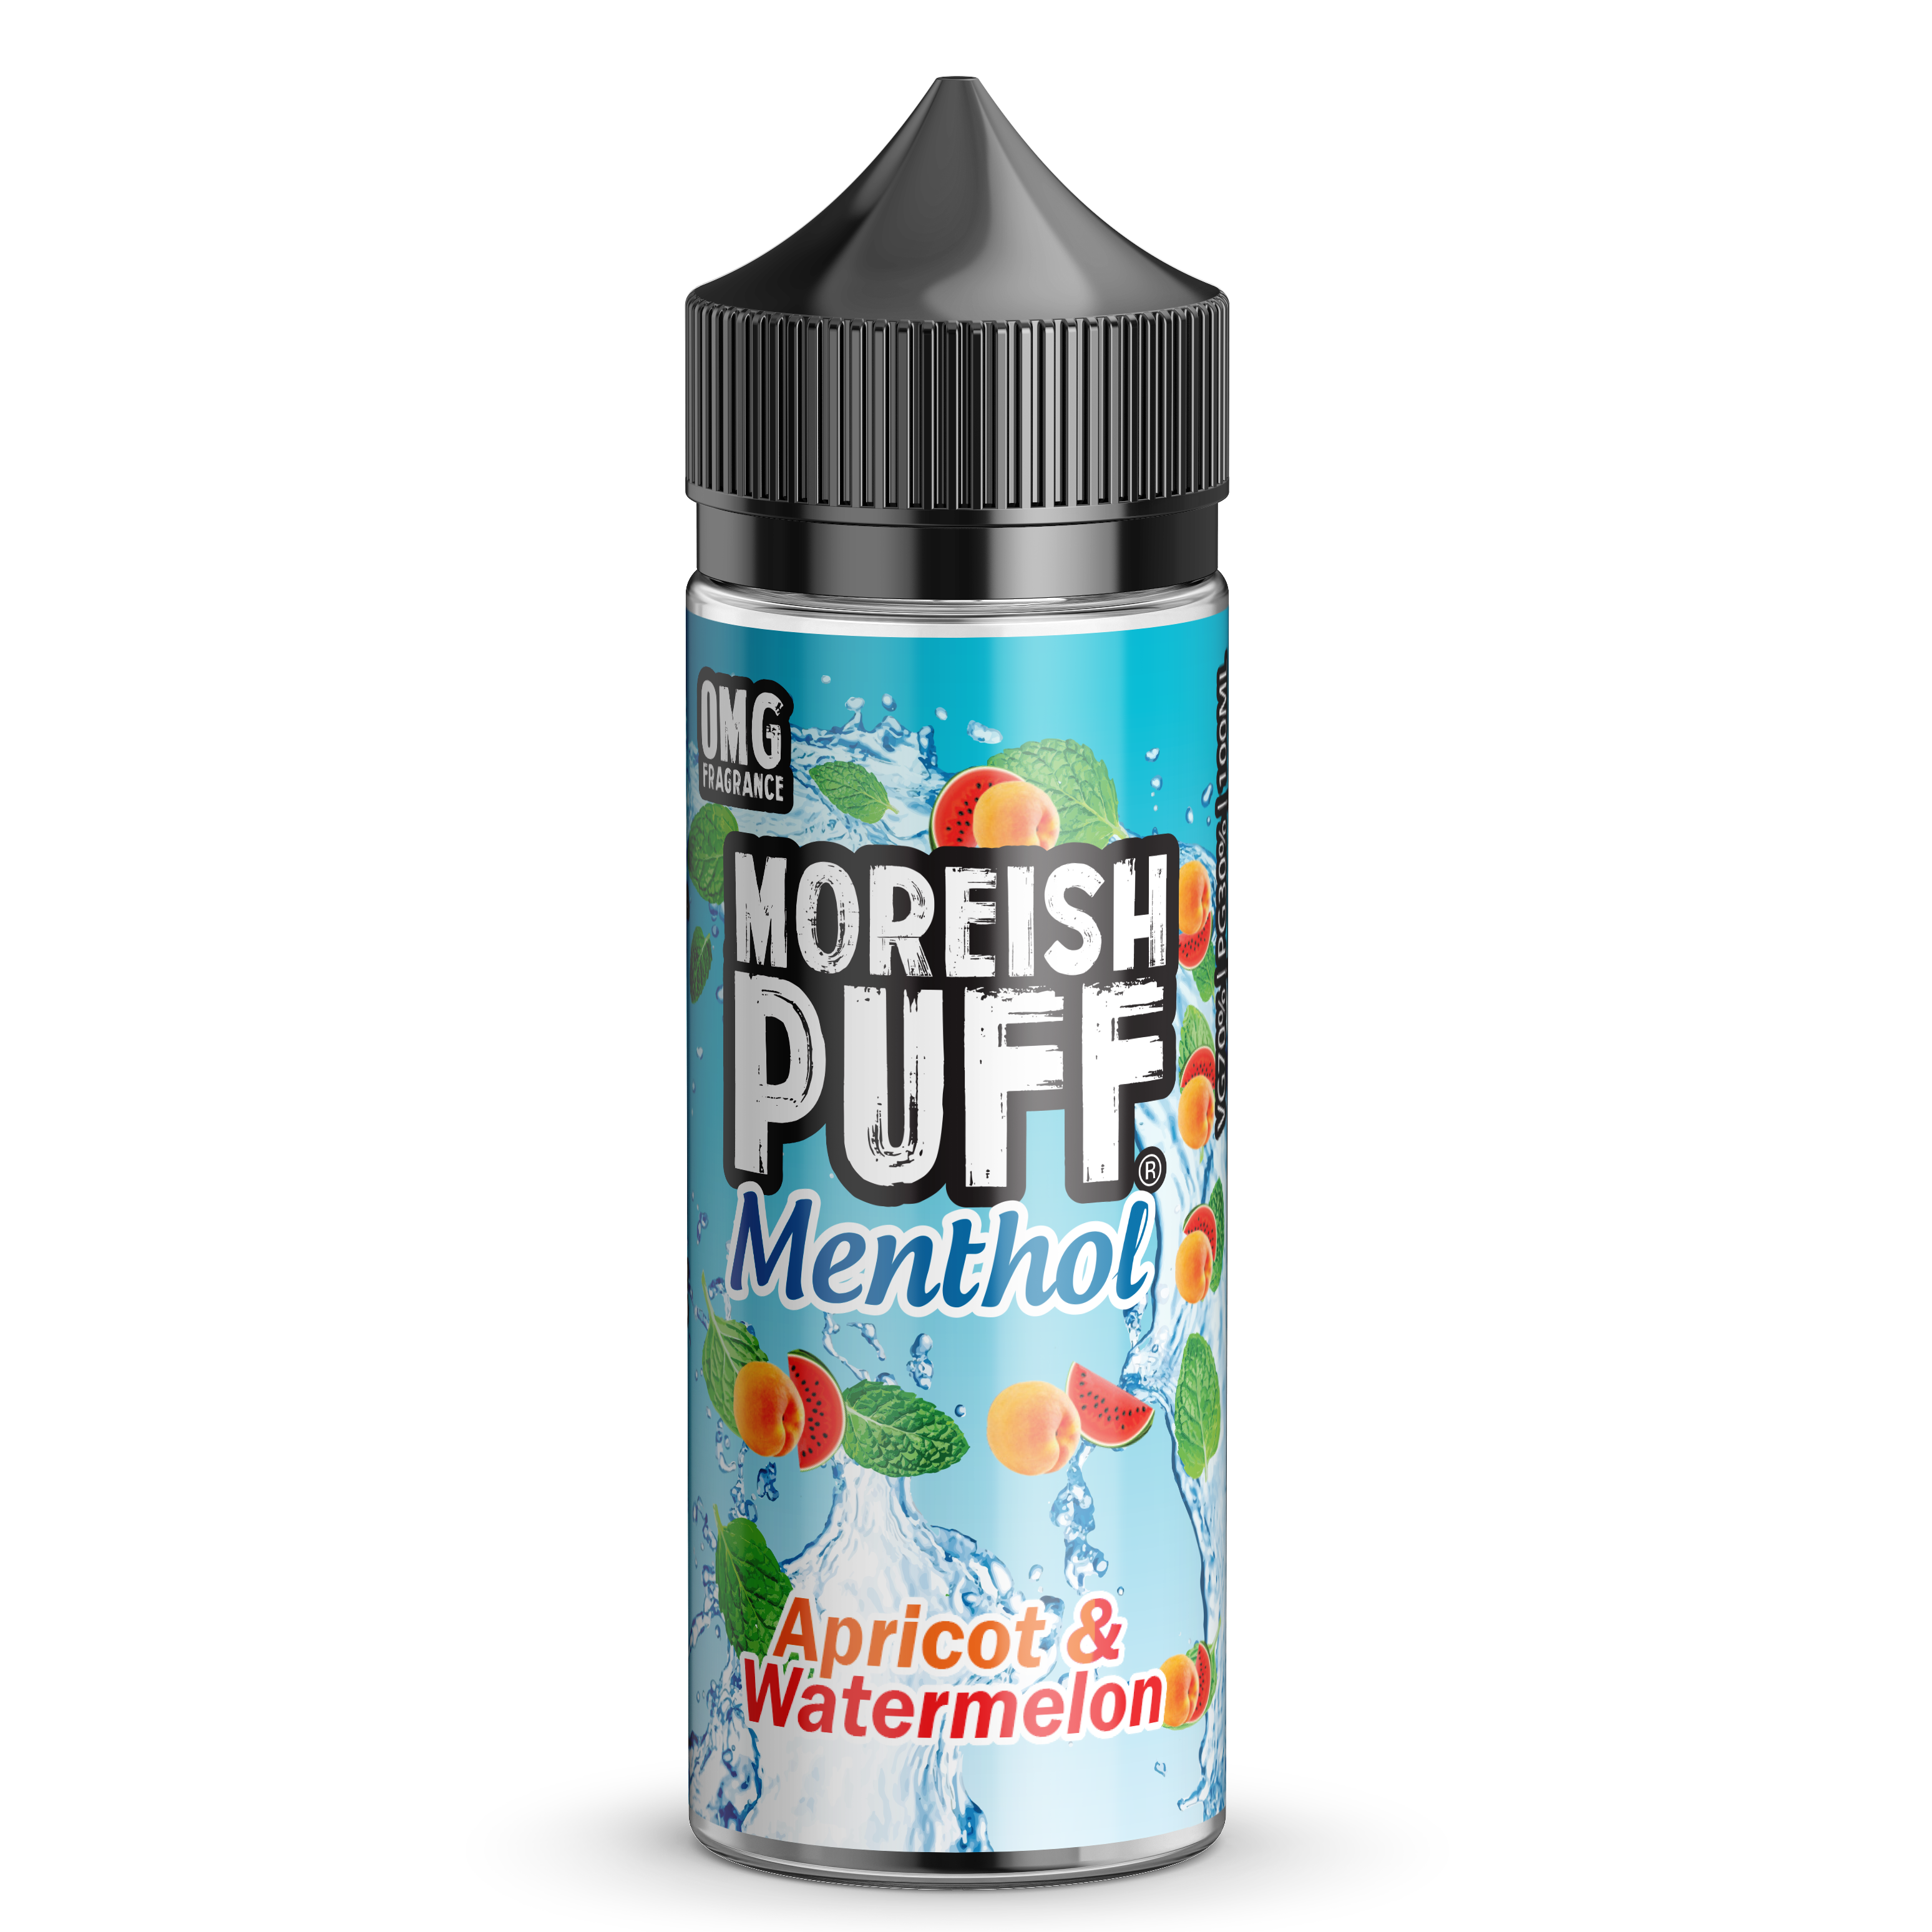 Moreish Puff Menthol Apricot & Watermelon 0mg 100ml Shortfill E-Liquid